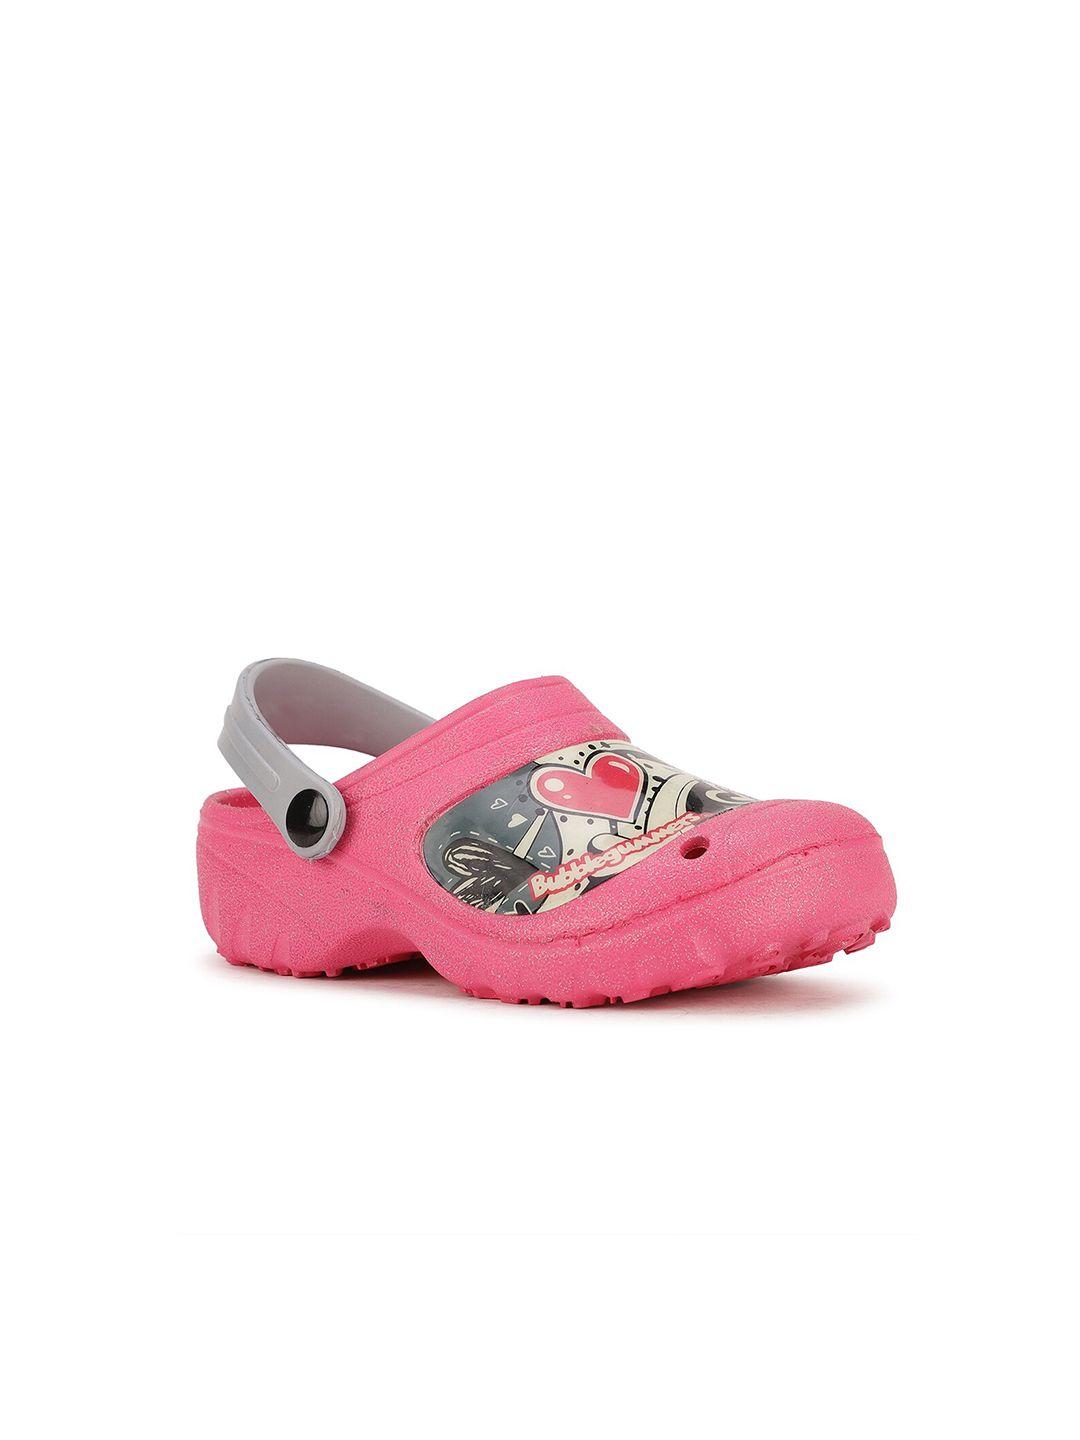 bubblegummers girls pink & grey printed clogs